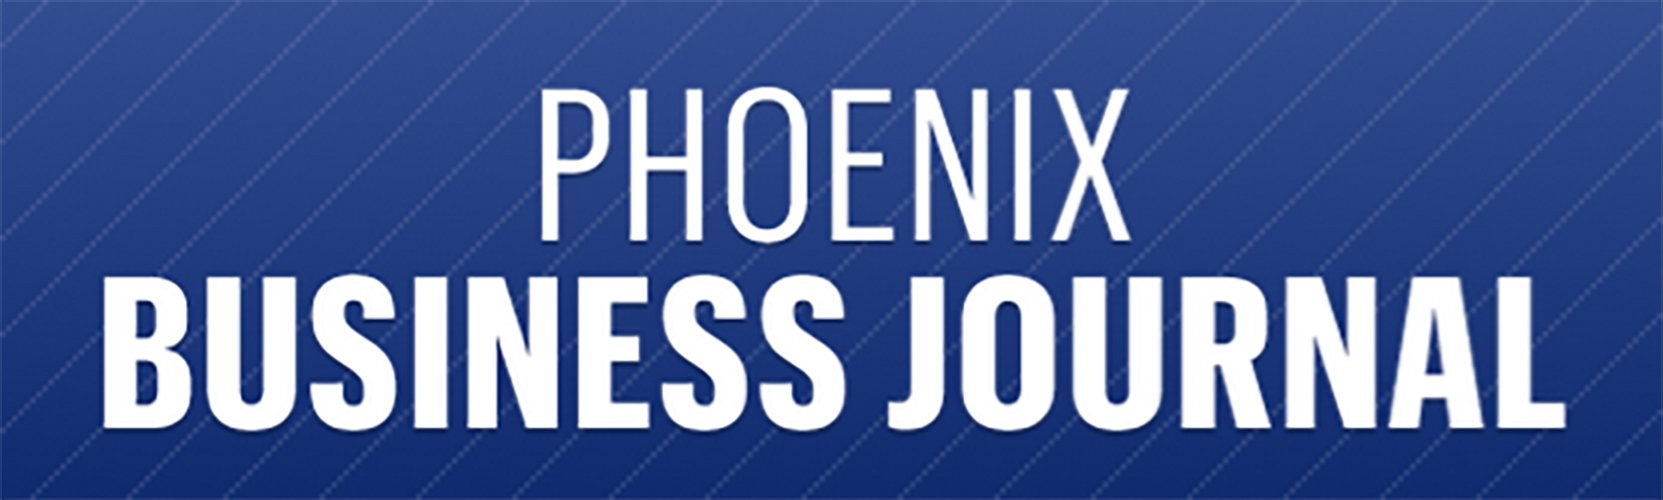 Phoenix Buisness Journal logo